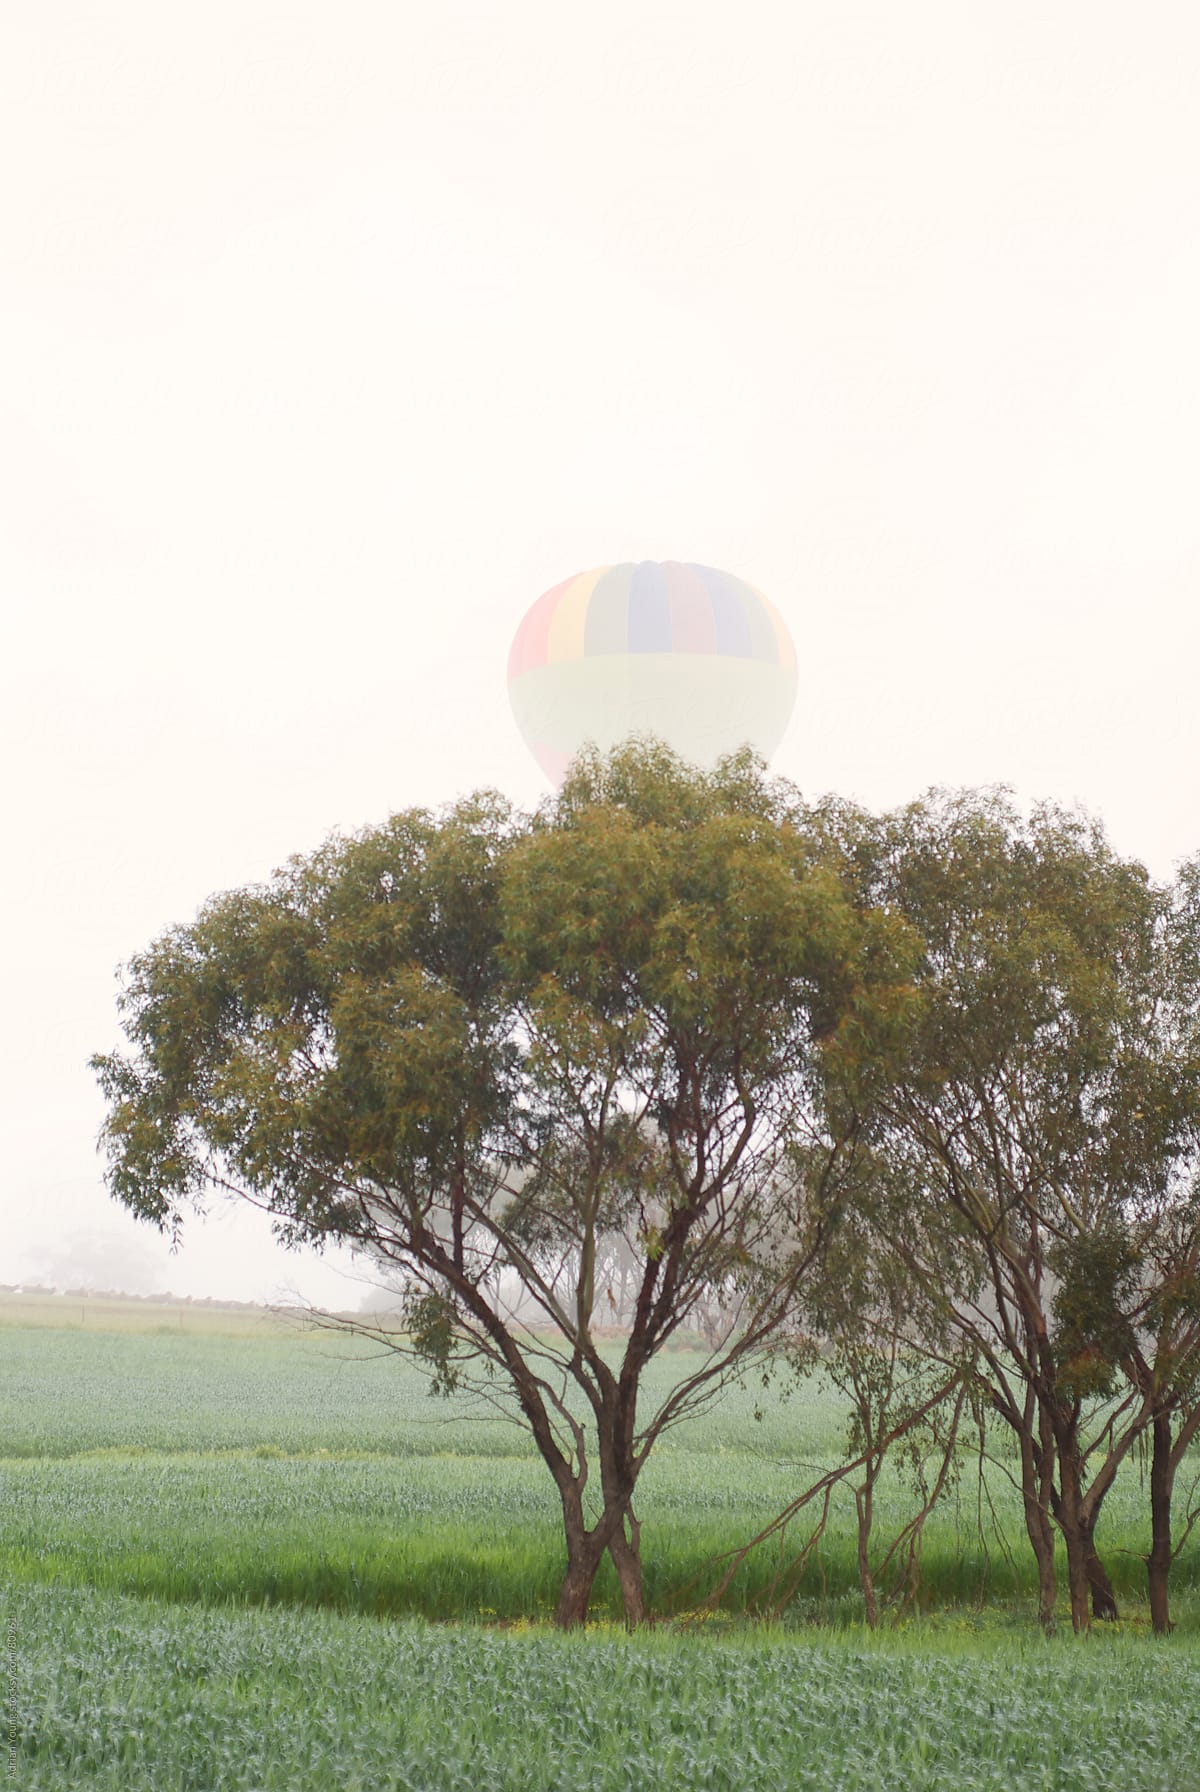 Hot Air Balloon Rising Over Trees